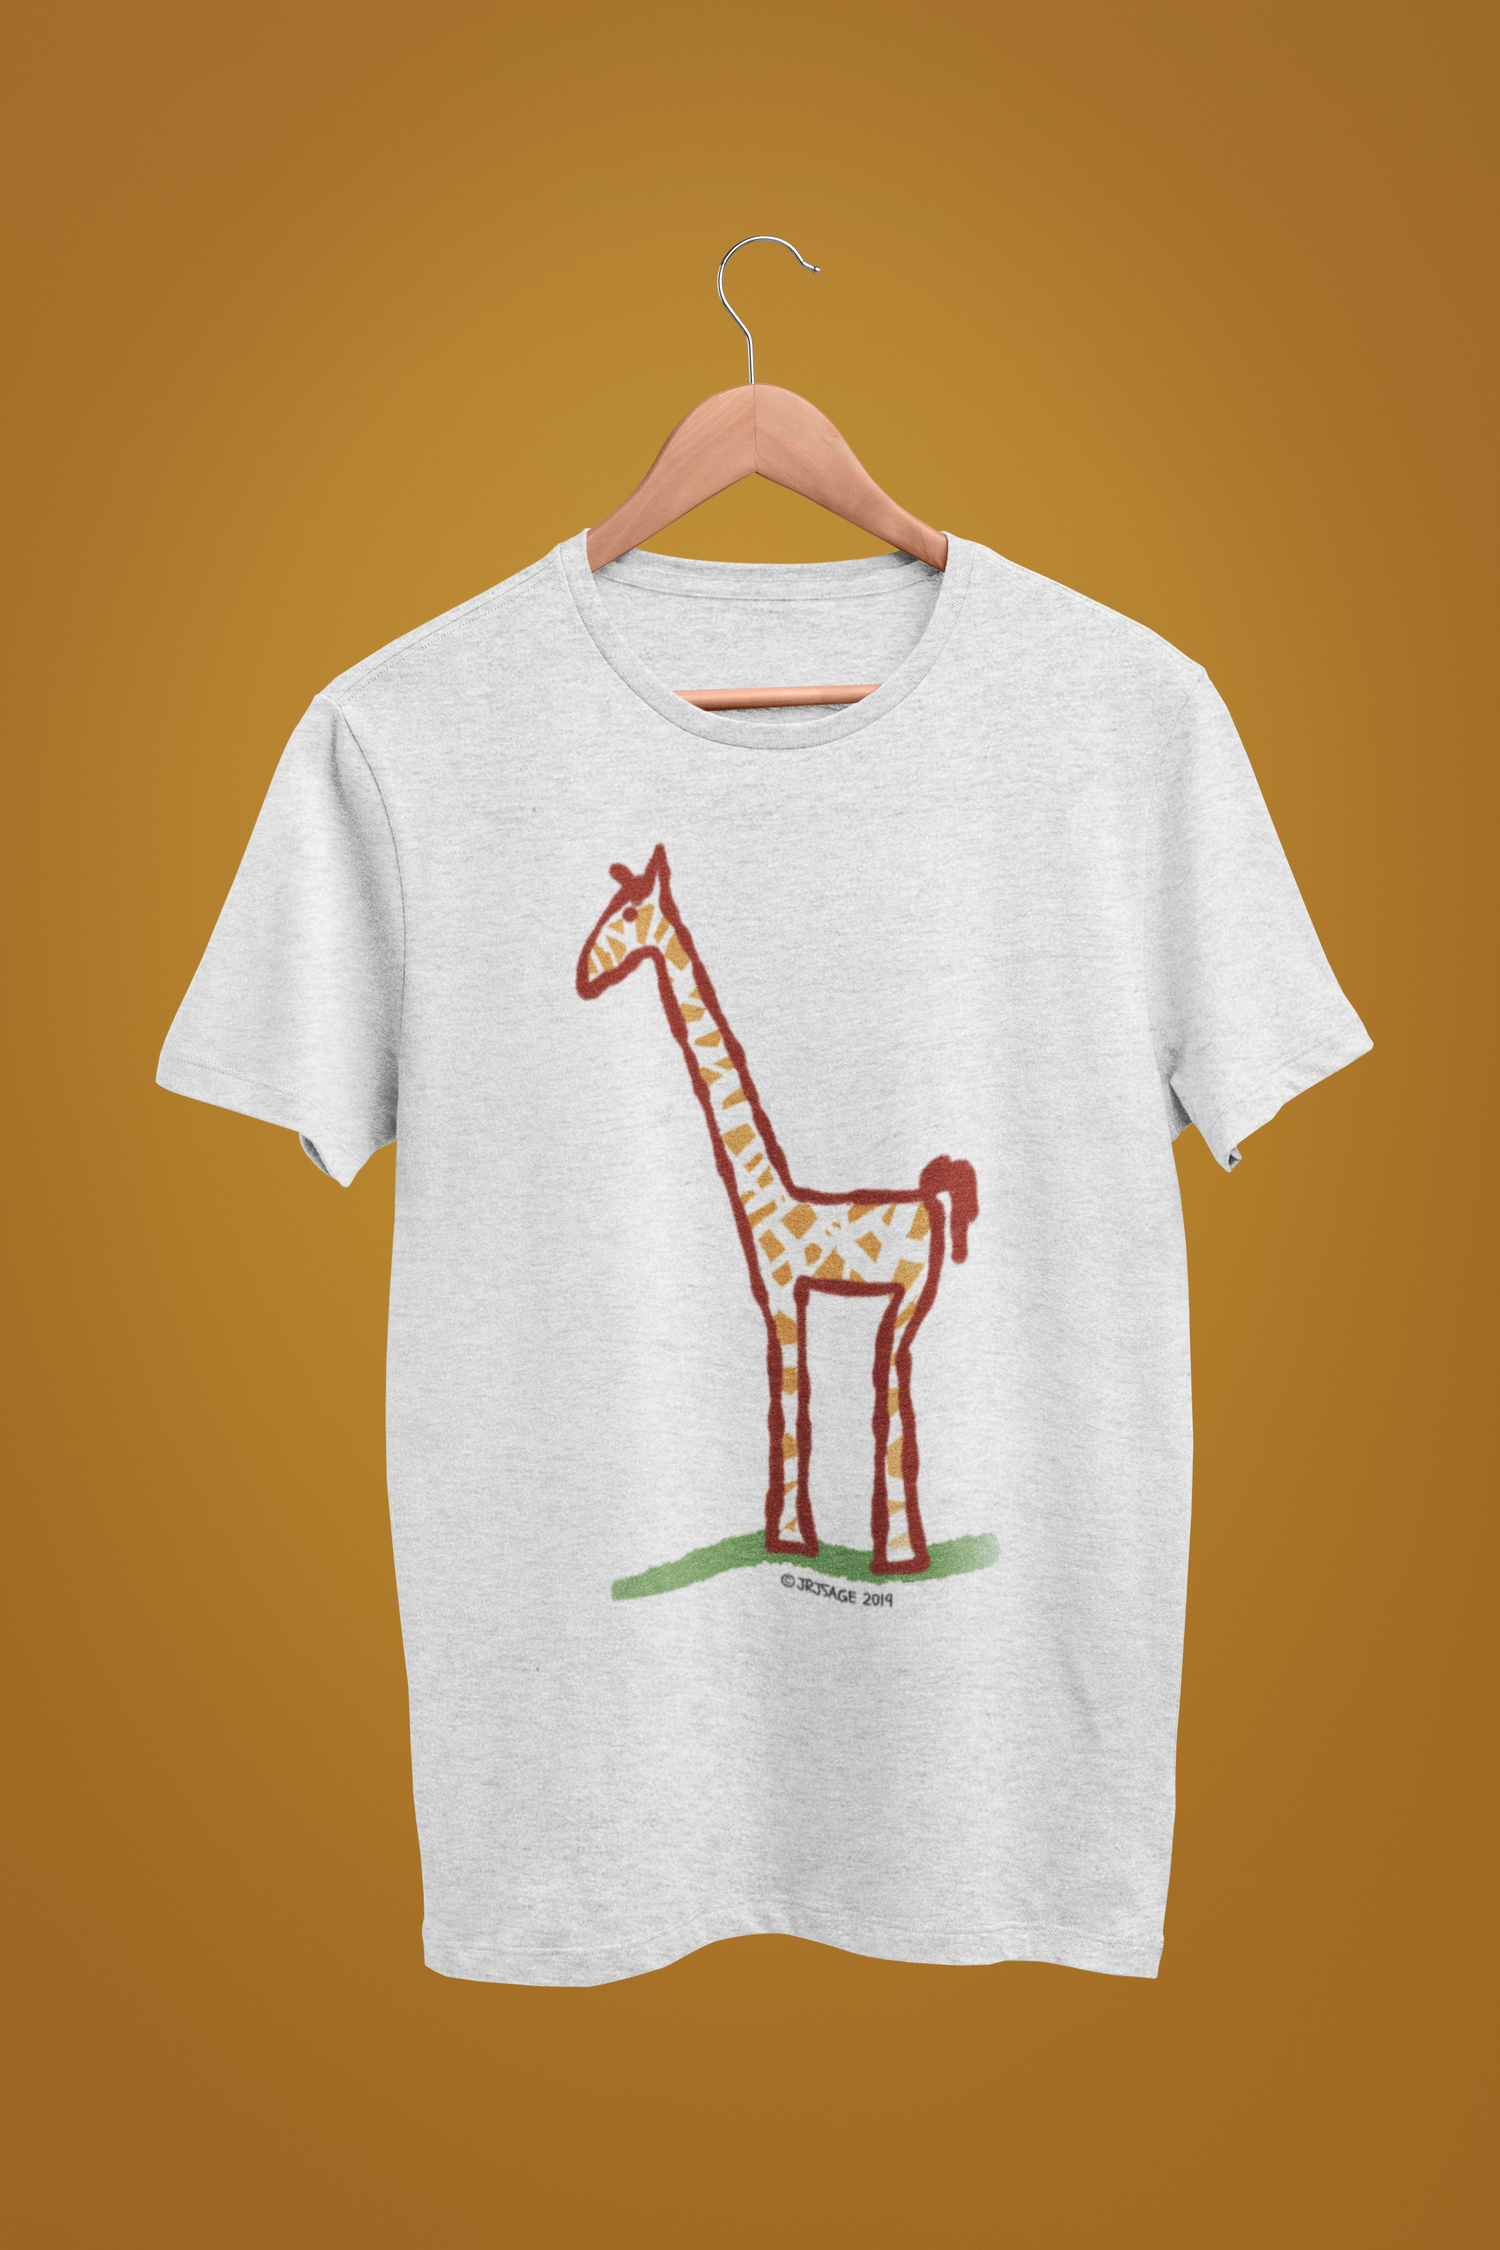 Giraffe t-shirt - Illustrated Jeffrey Giraffe tshirt on cream heather grey vegan cotton t-shirts by Hector and Bone